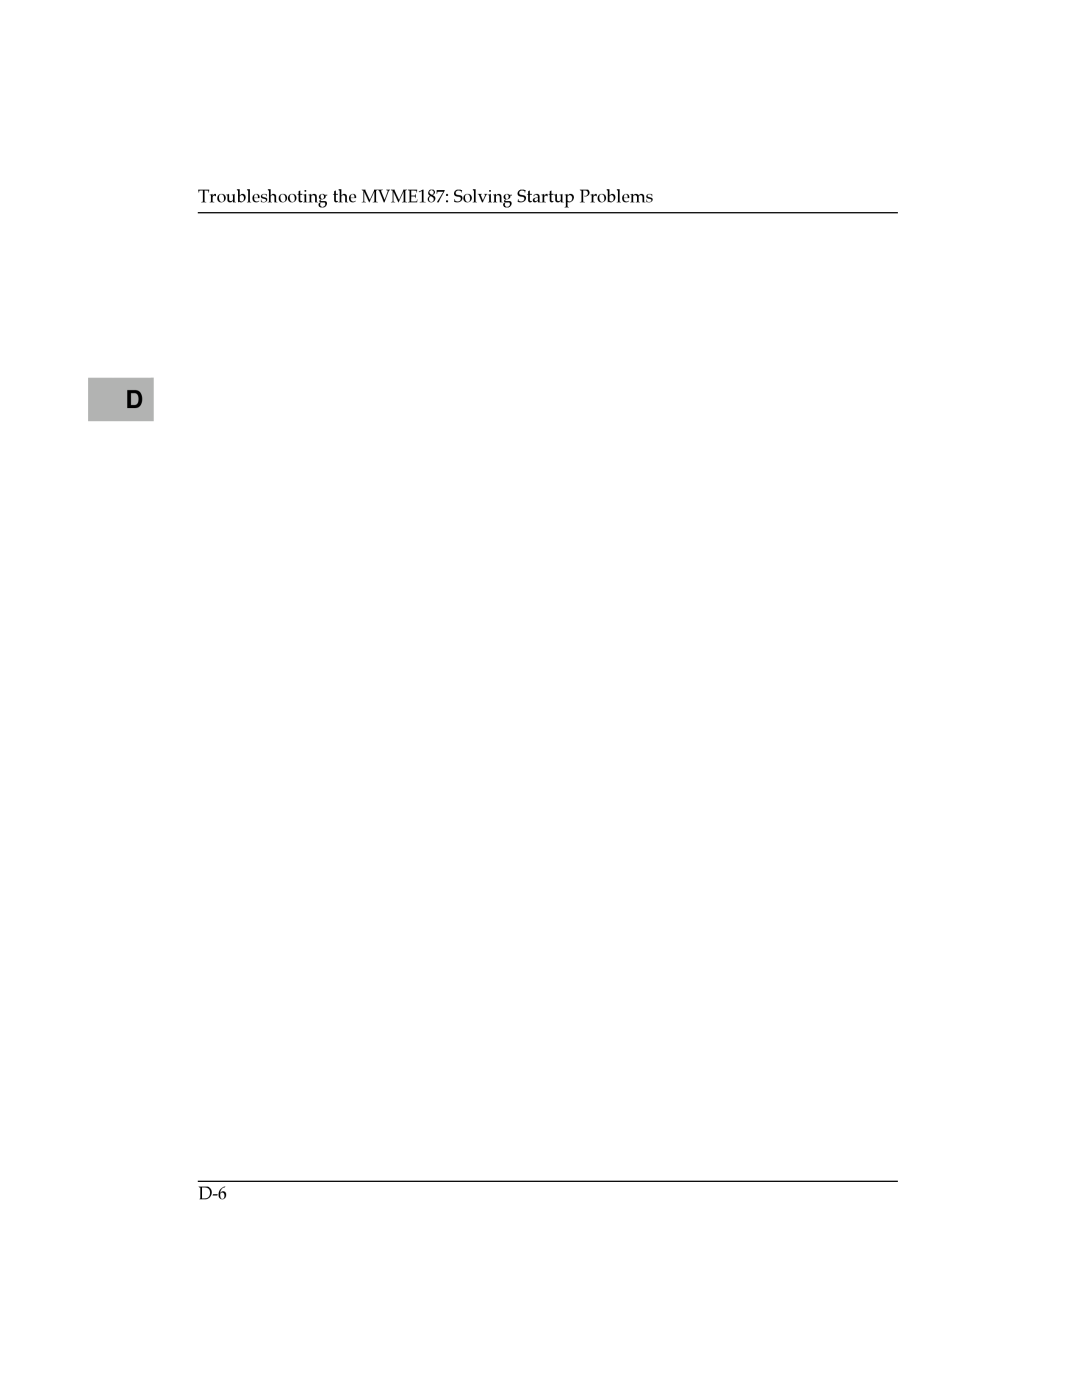 Motorola manual Troubleshooting the MVME187 Solving Startup Problems 